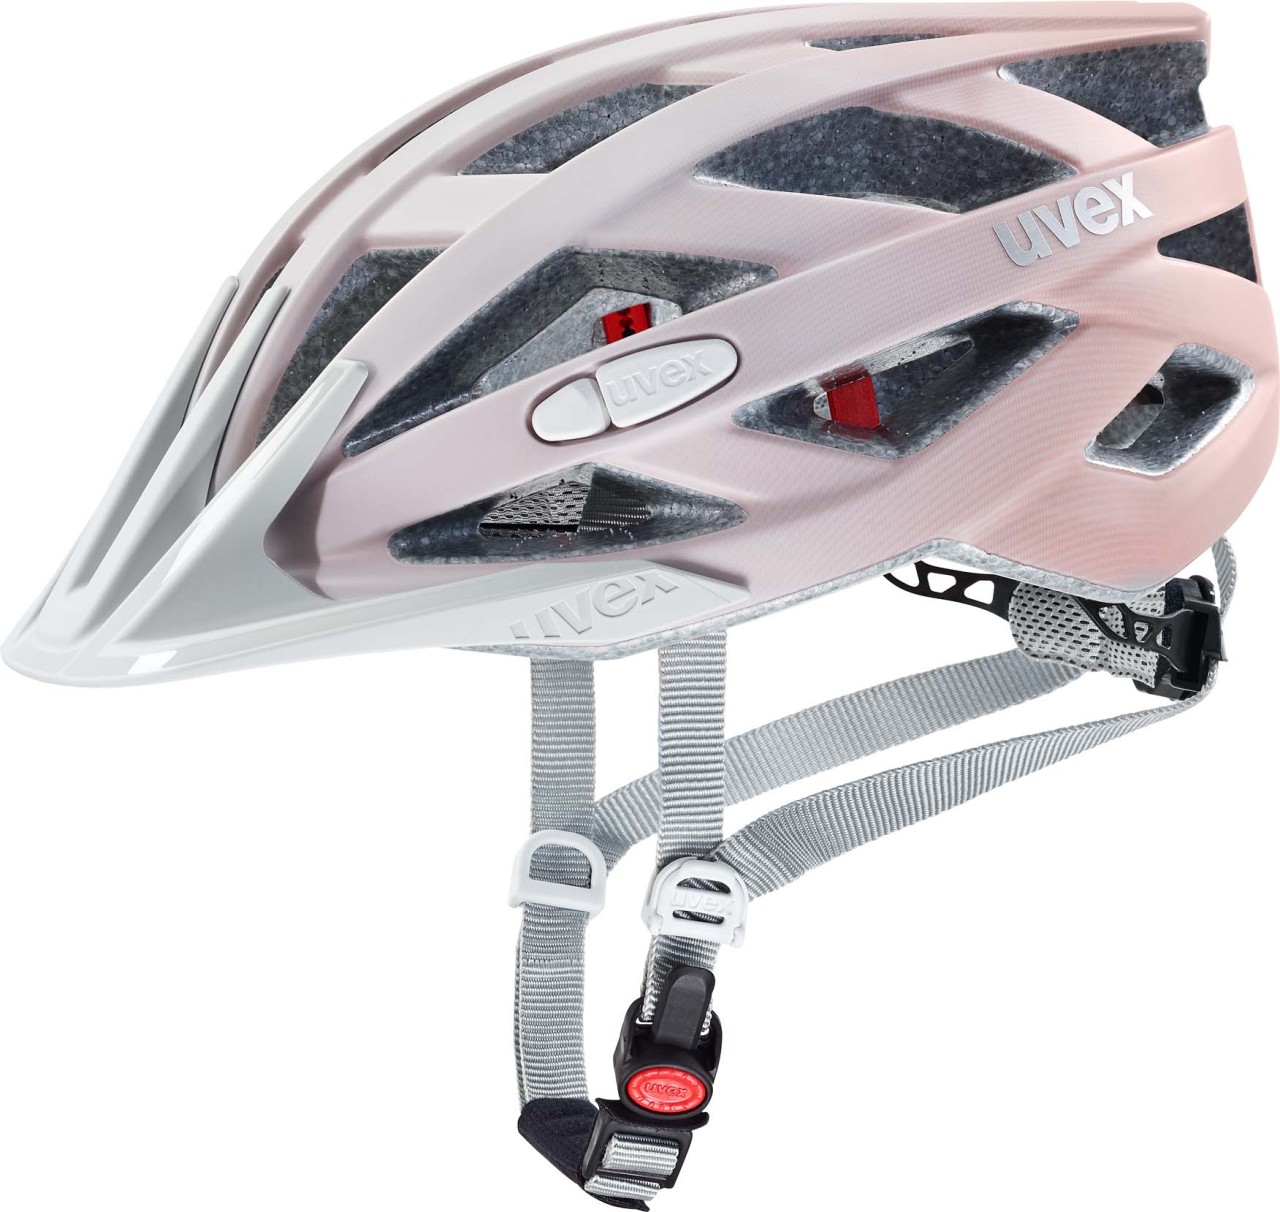 Uvex casco da bicicletta i-vo cc